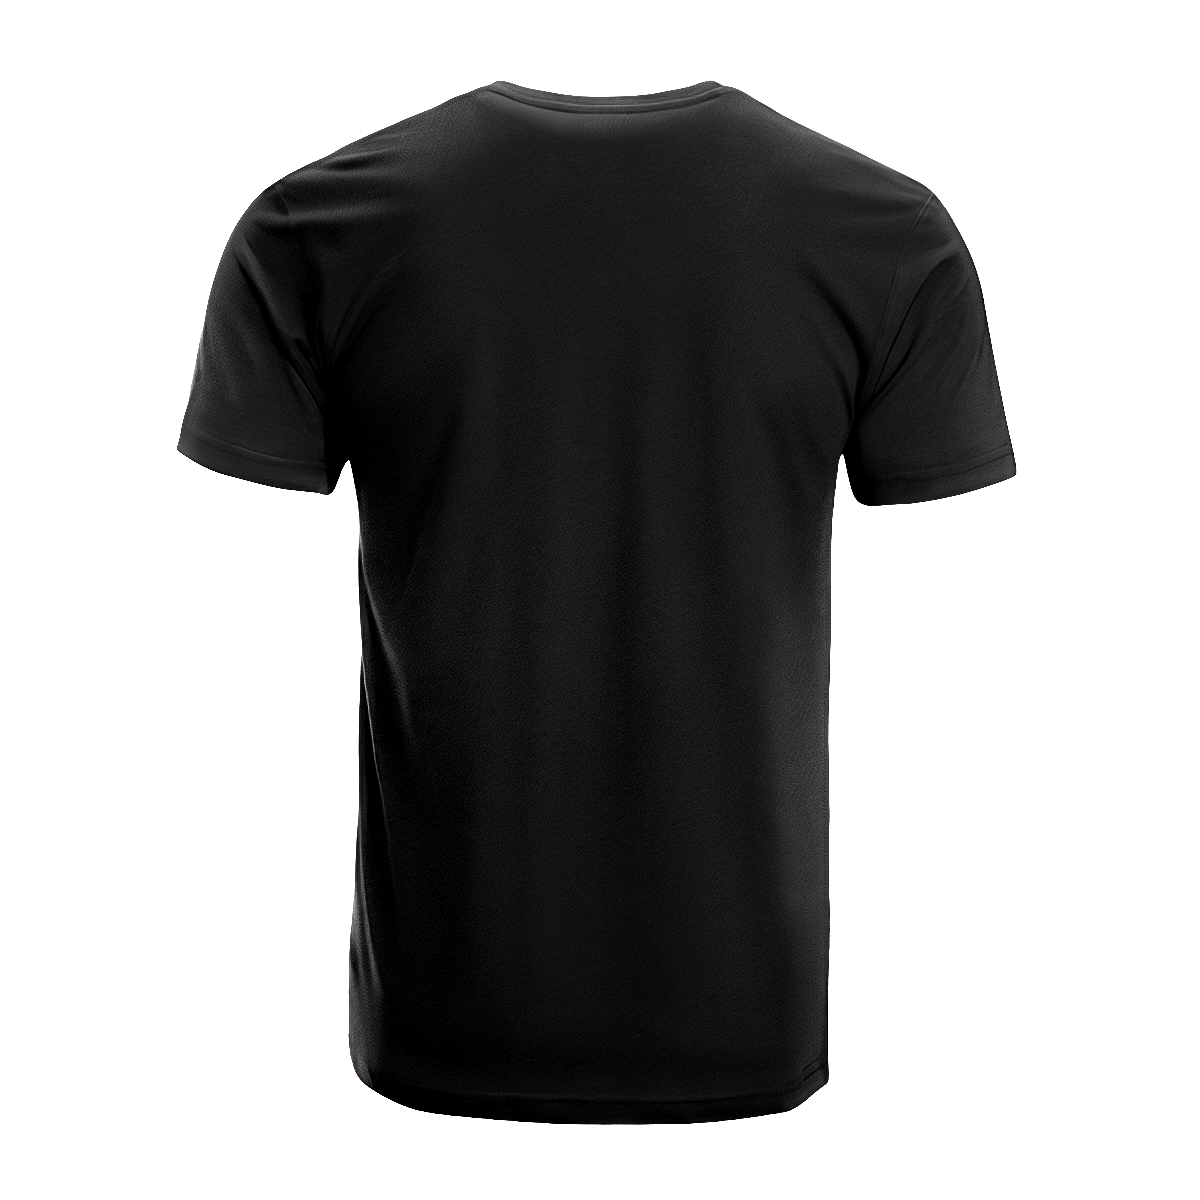 Elliot Tartan Crest T-shirt - I'm not yelling style